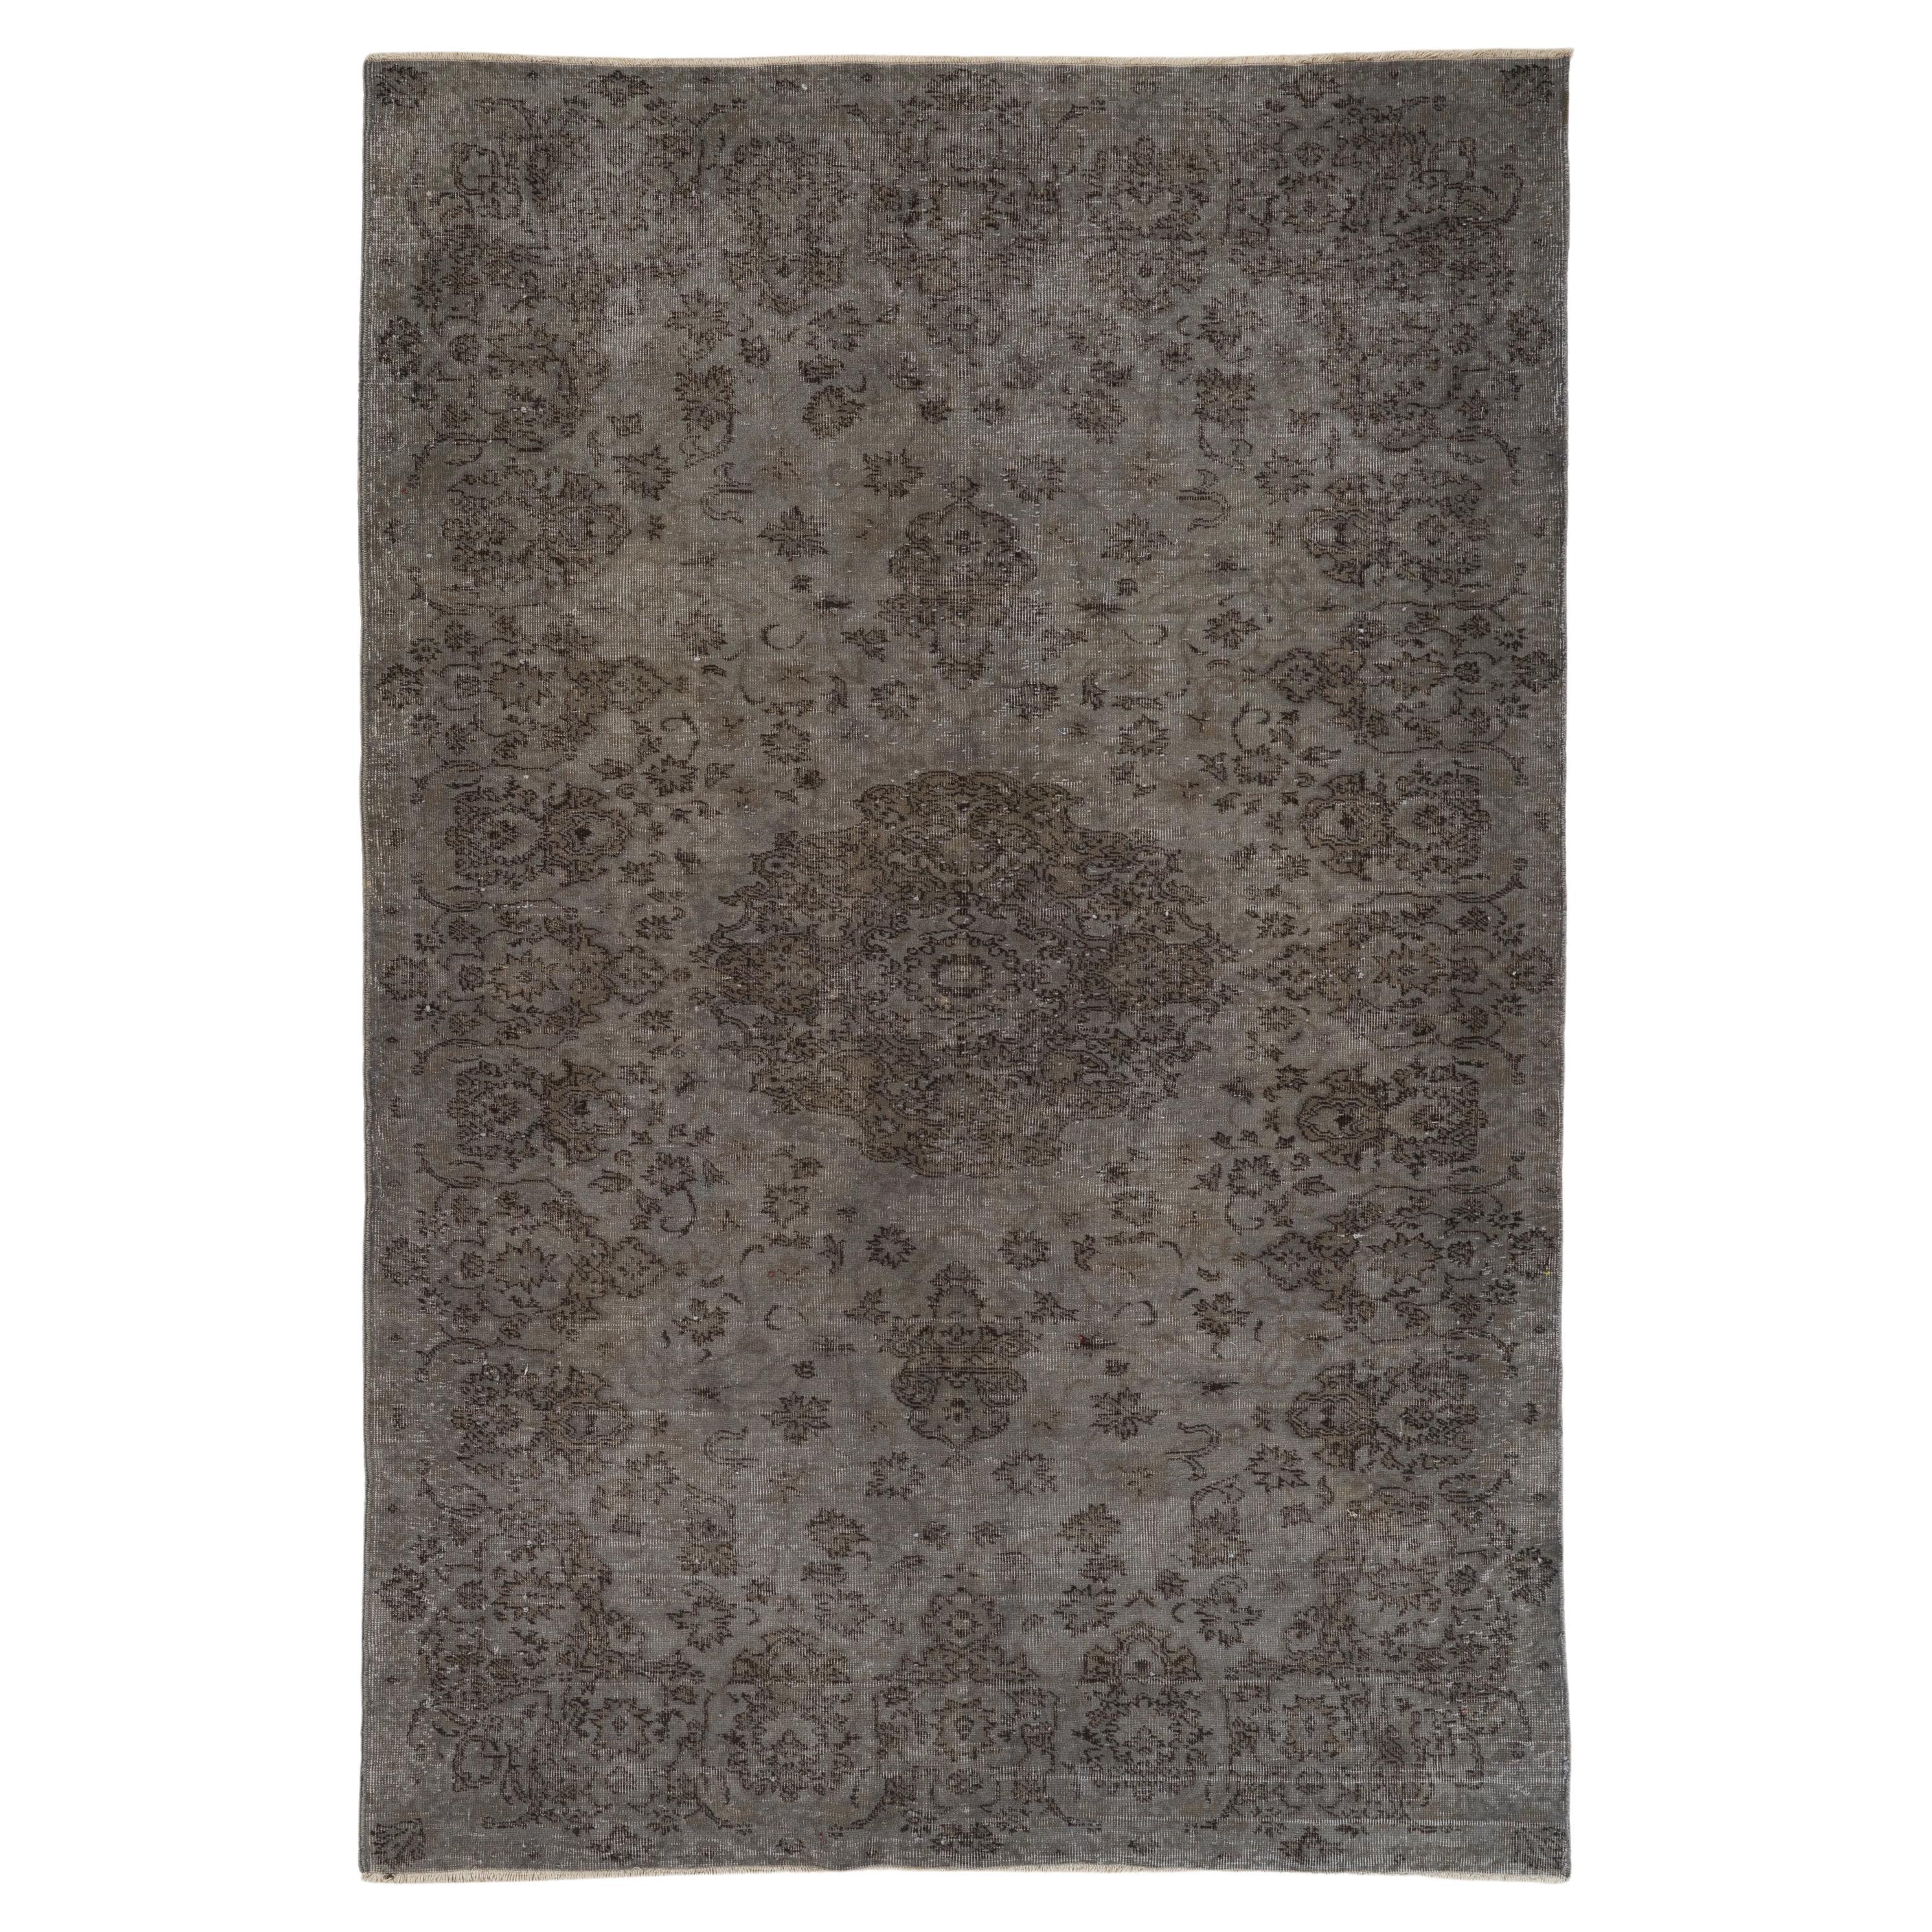 6x9.2 Ft Vintage Handmade Wool Area Rug. Charcoal Gray Turkish Modern Carpet For Sale